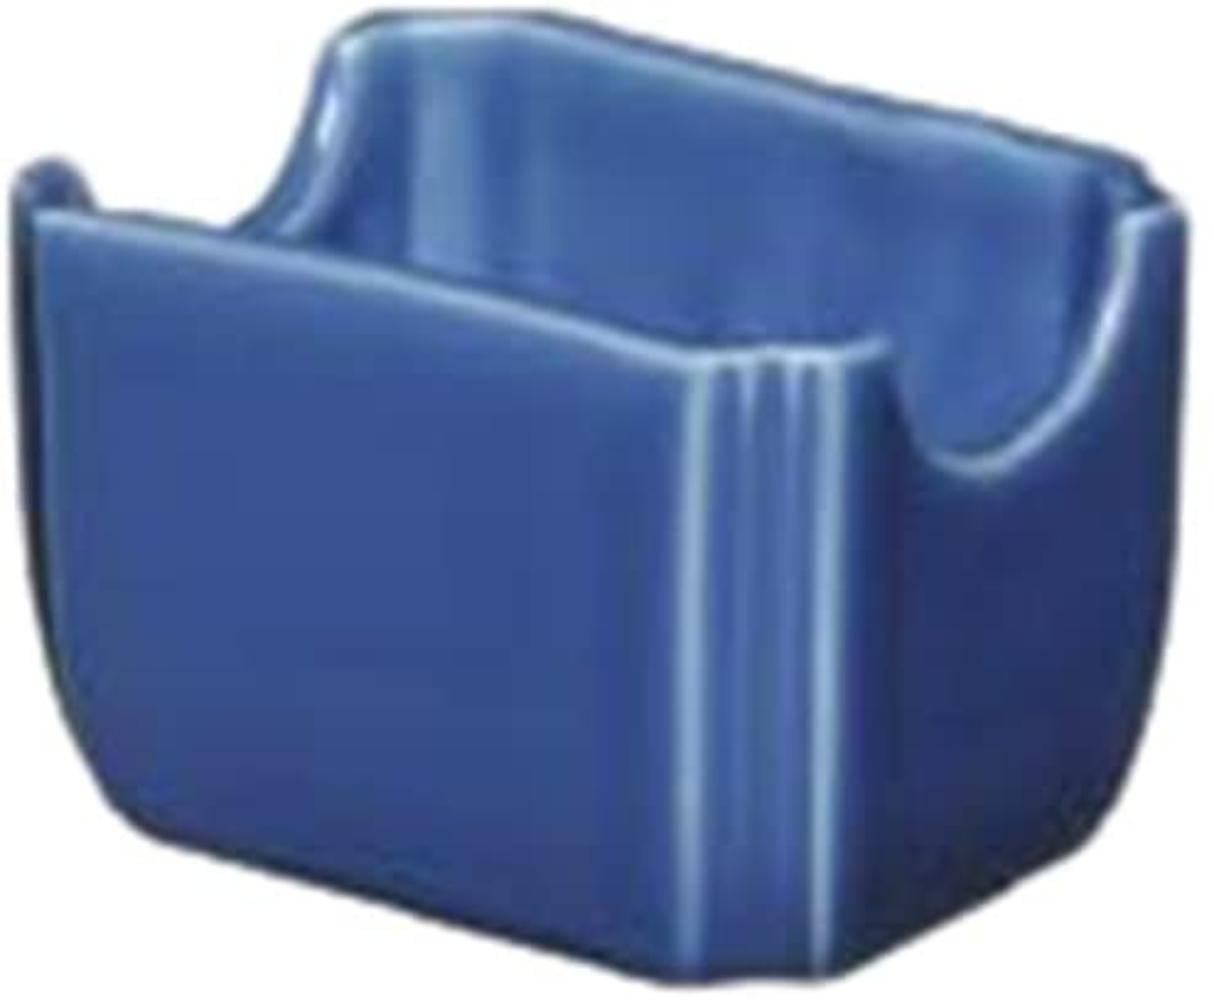 New Fiestaware Cobalt Blue Sugar Caddy 479105 